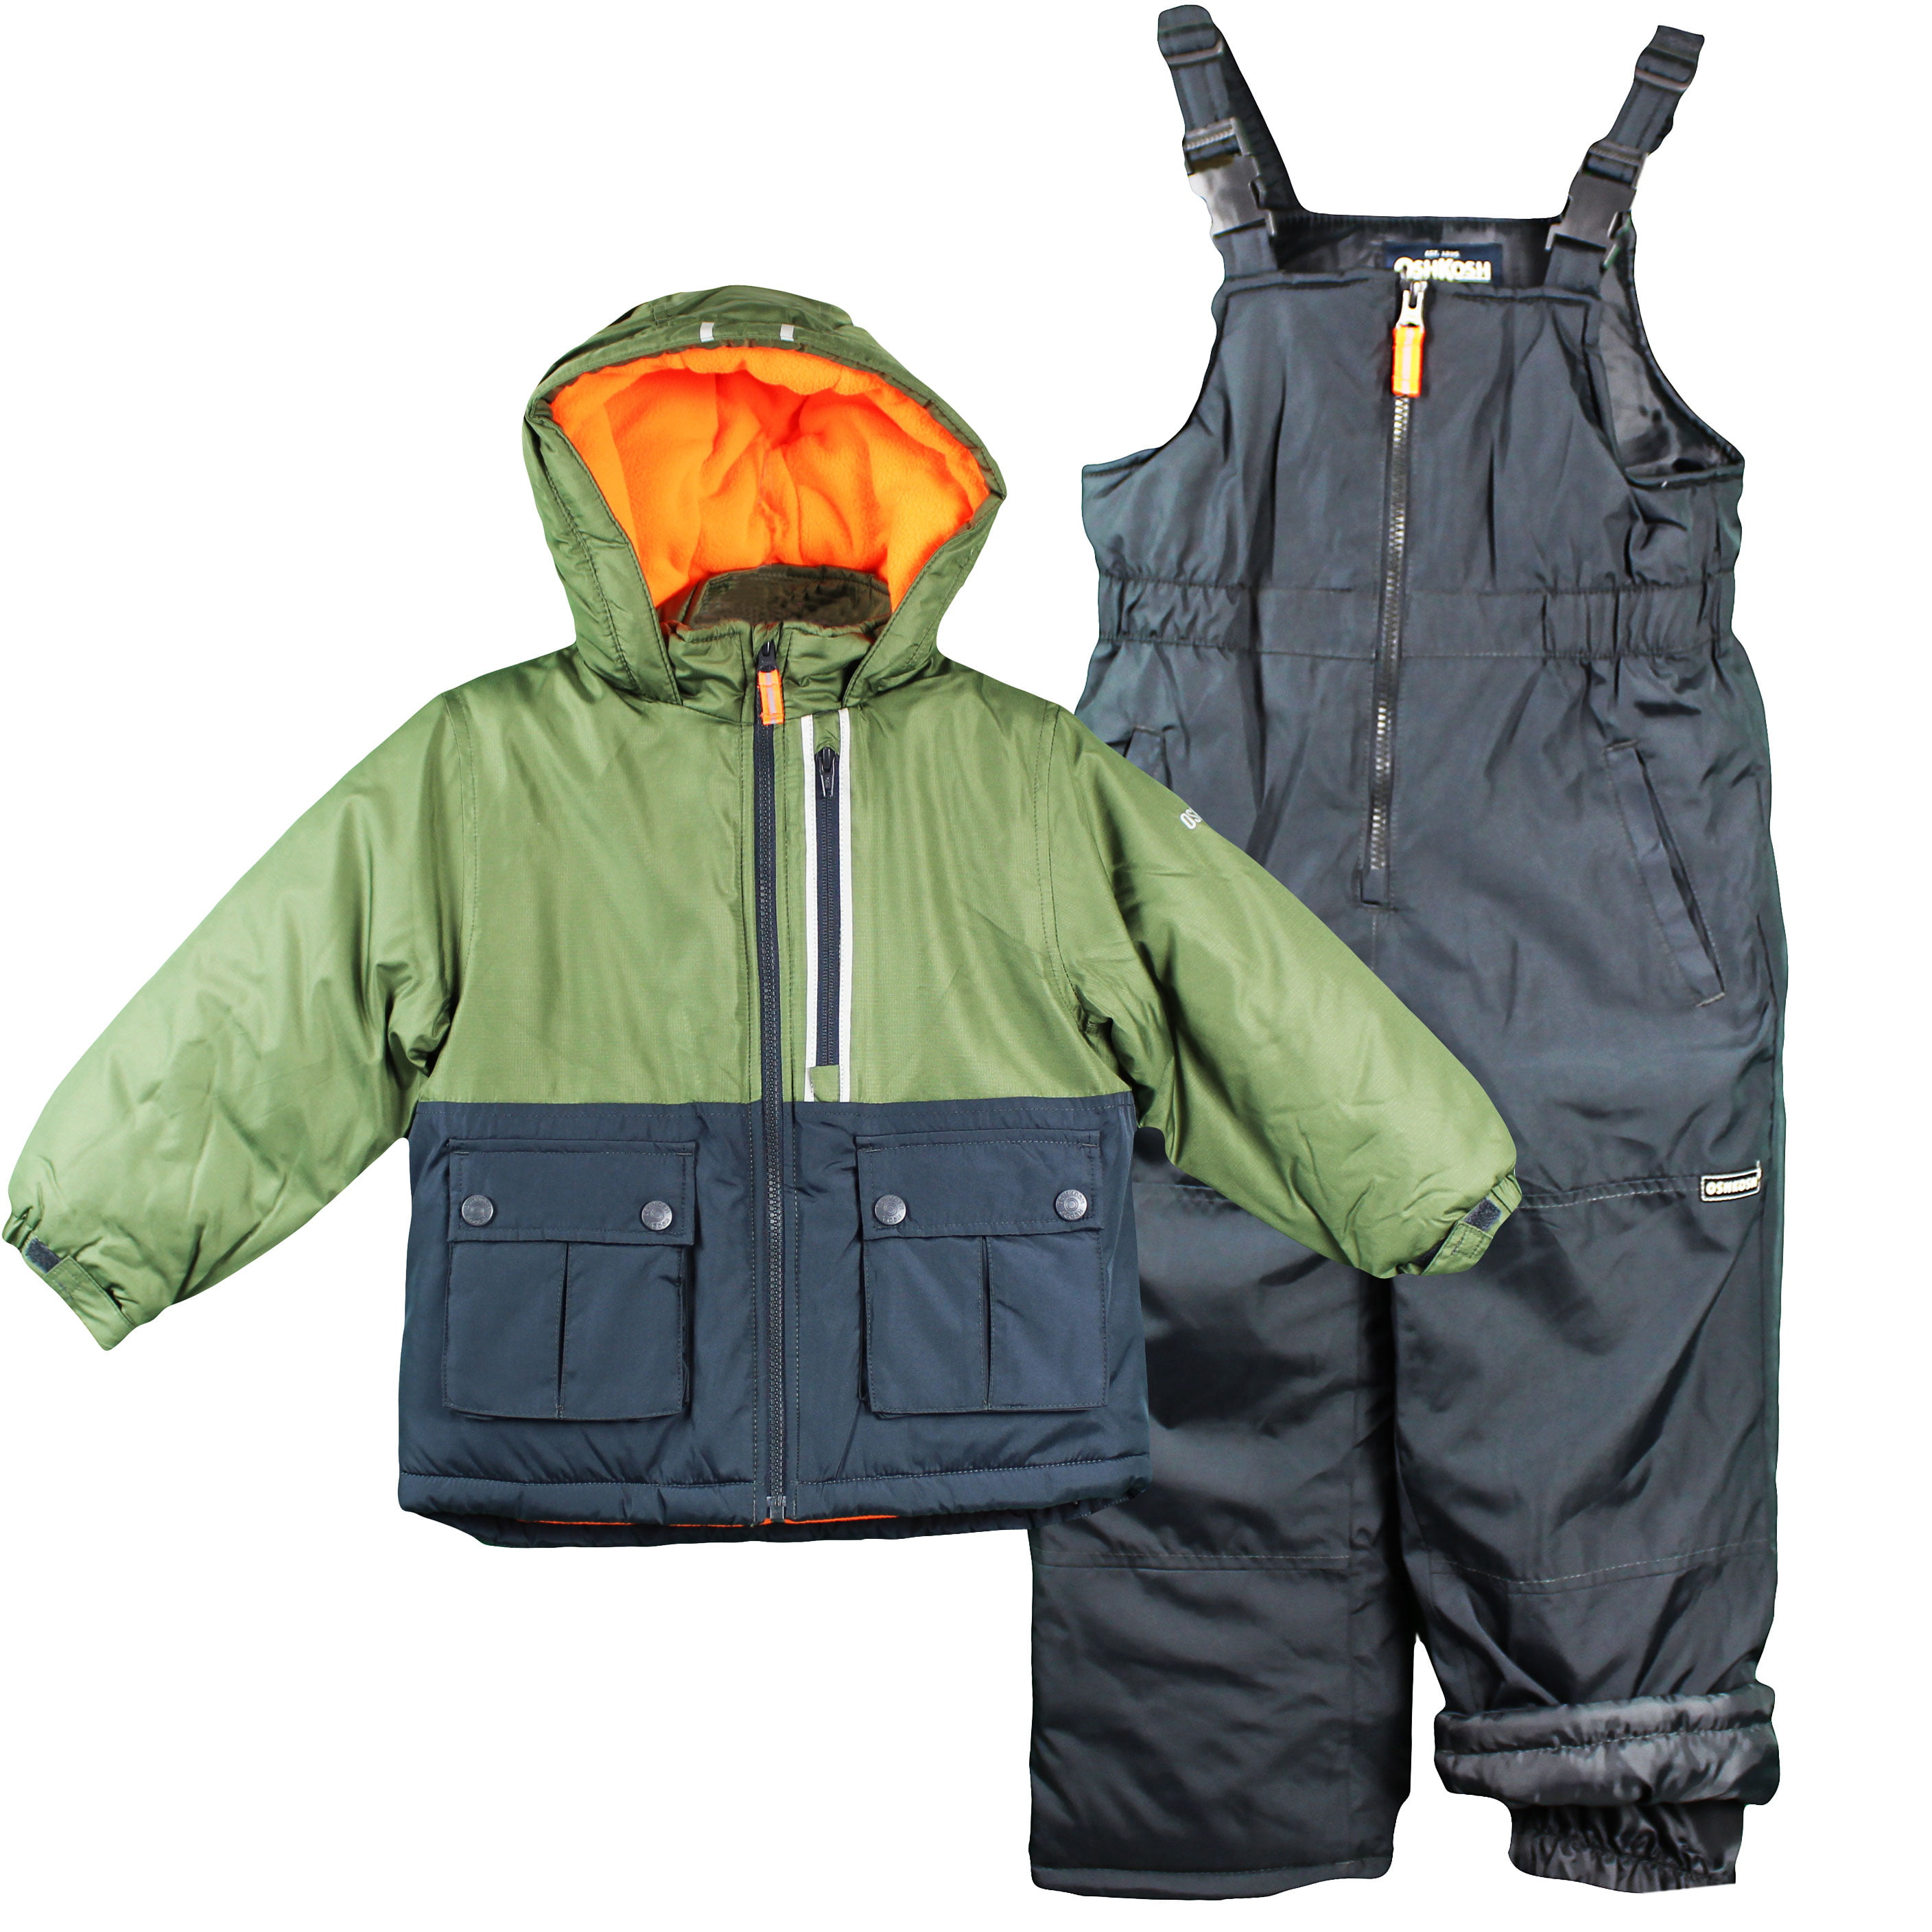 Mittens Or Gloves OshKosh Boys 2-7 Heavy Winter Jacket and Snow Pants Bib Overalls 